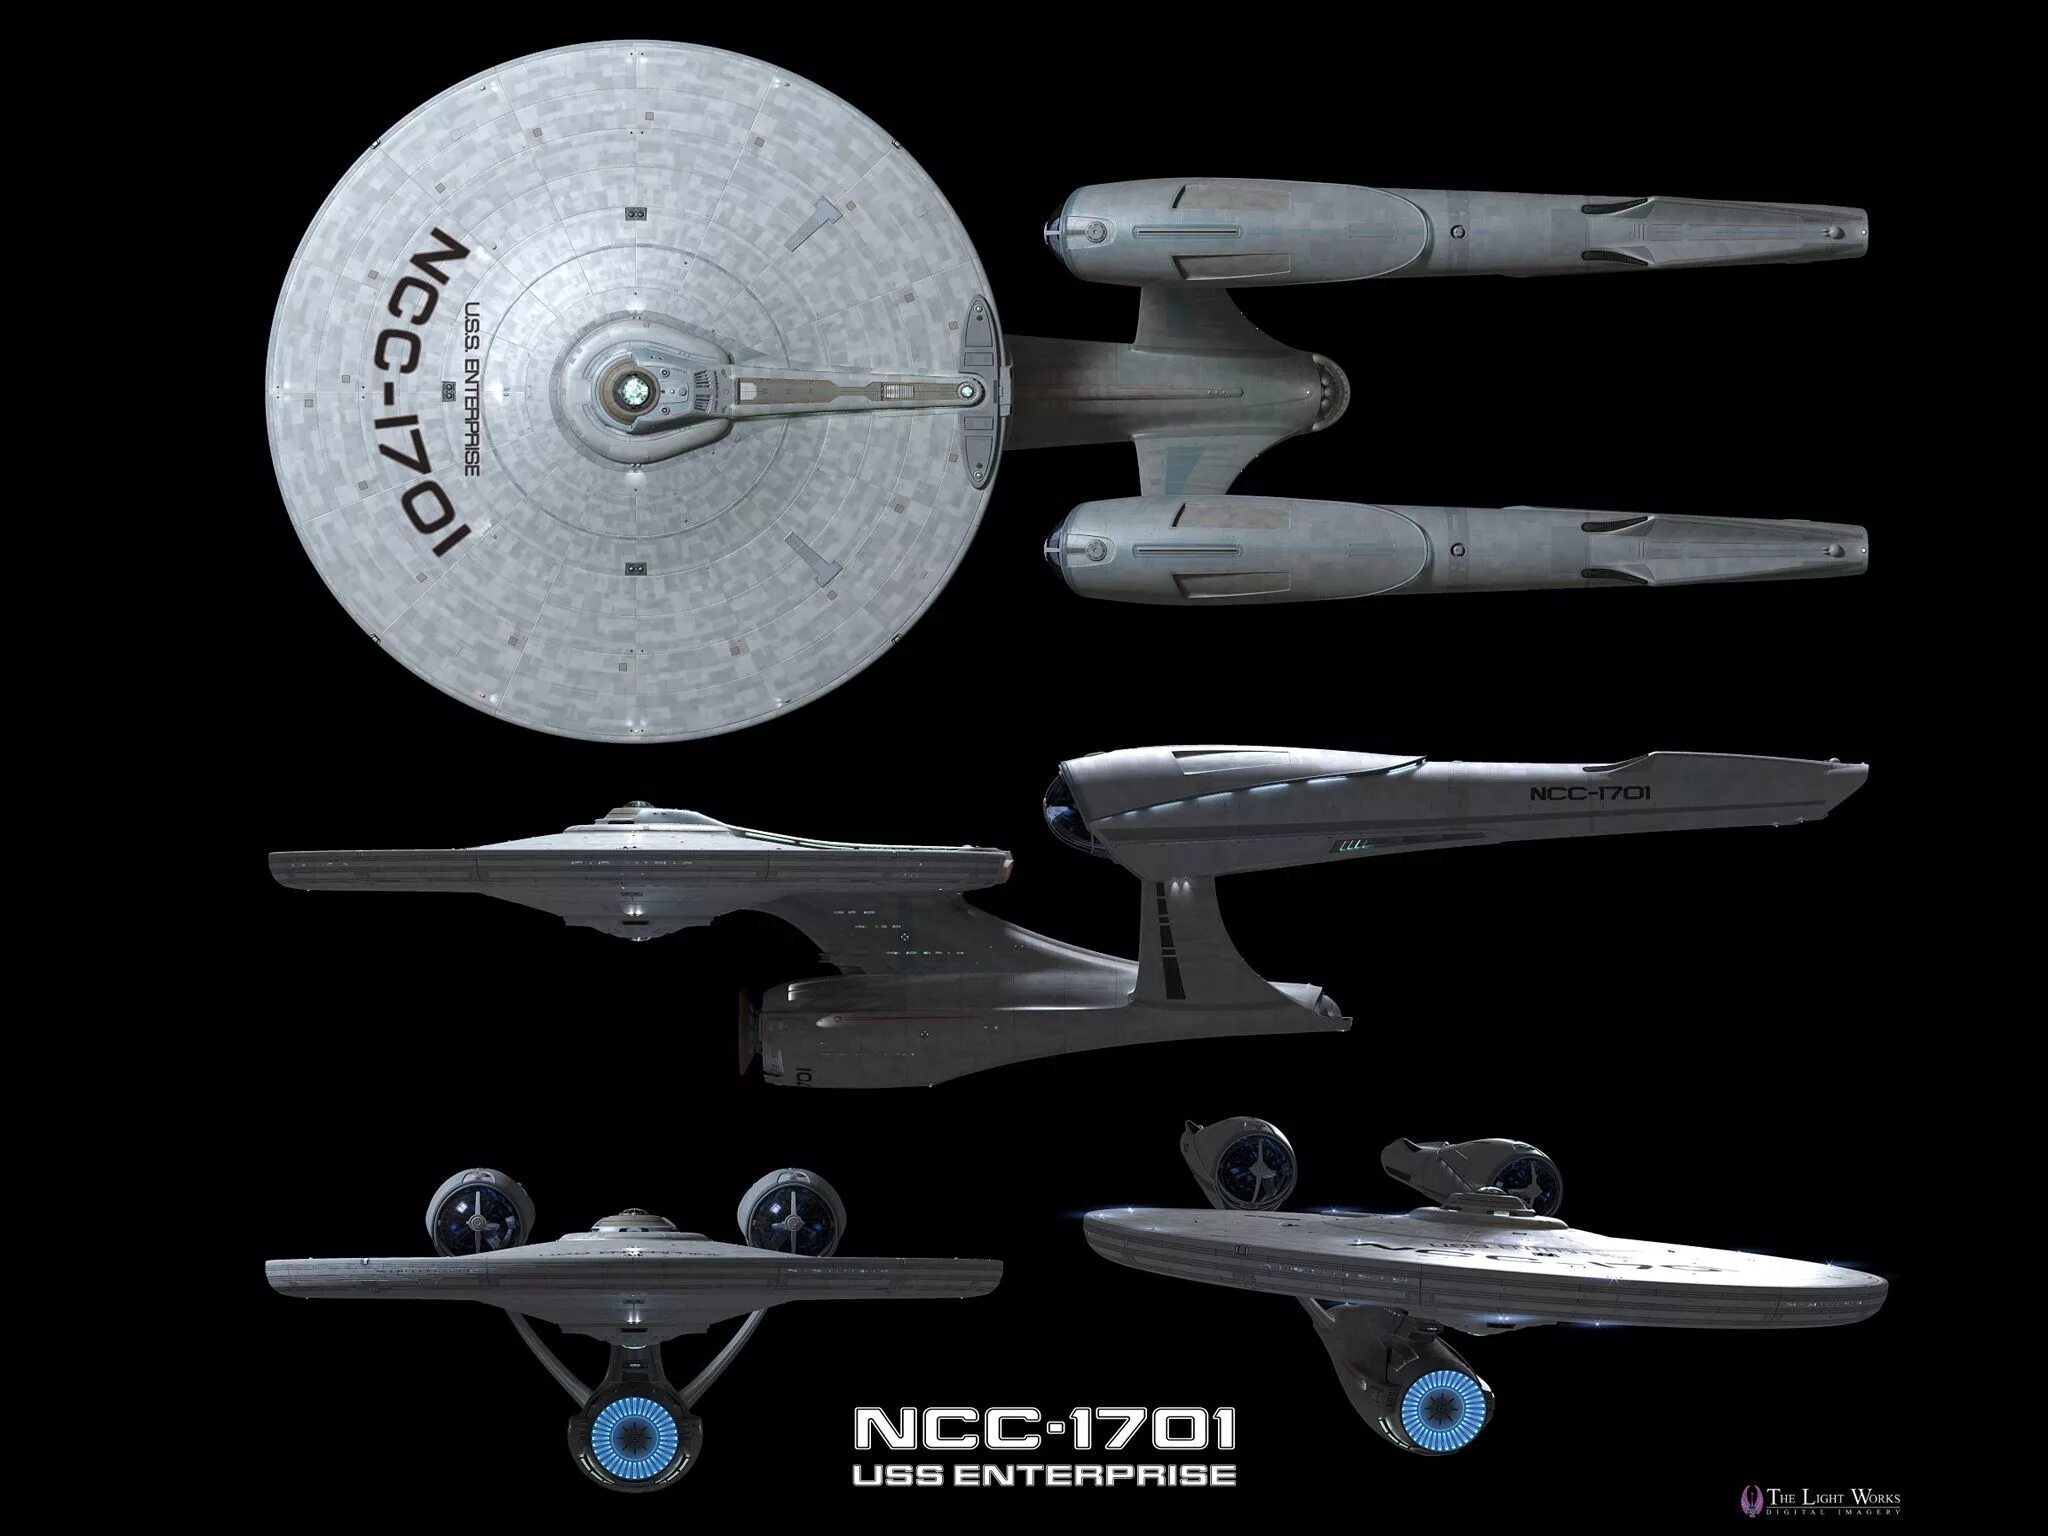 Enterprise starter. Стартрек Энтерпрайз NCC 1701. Star Trek u.s.s. Enterprise NCC-1701. Звездолет Энтерпрайз NCC-1701 D.